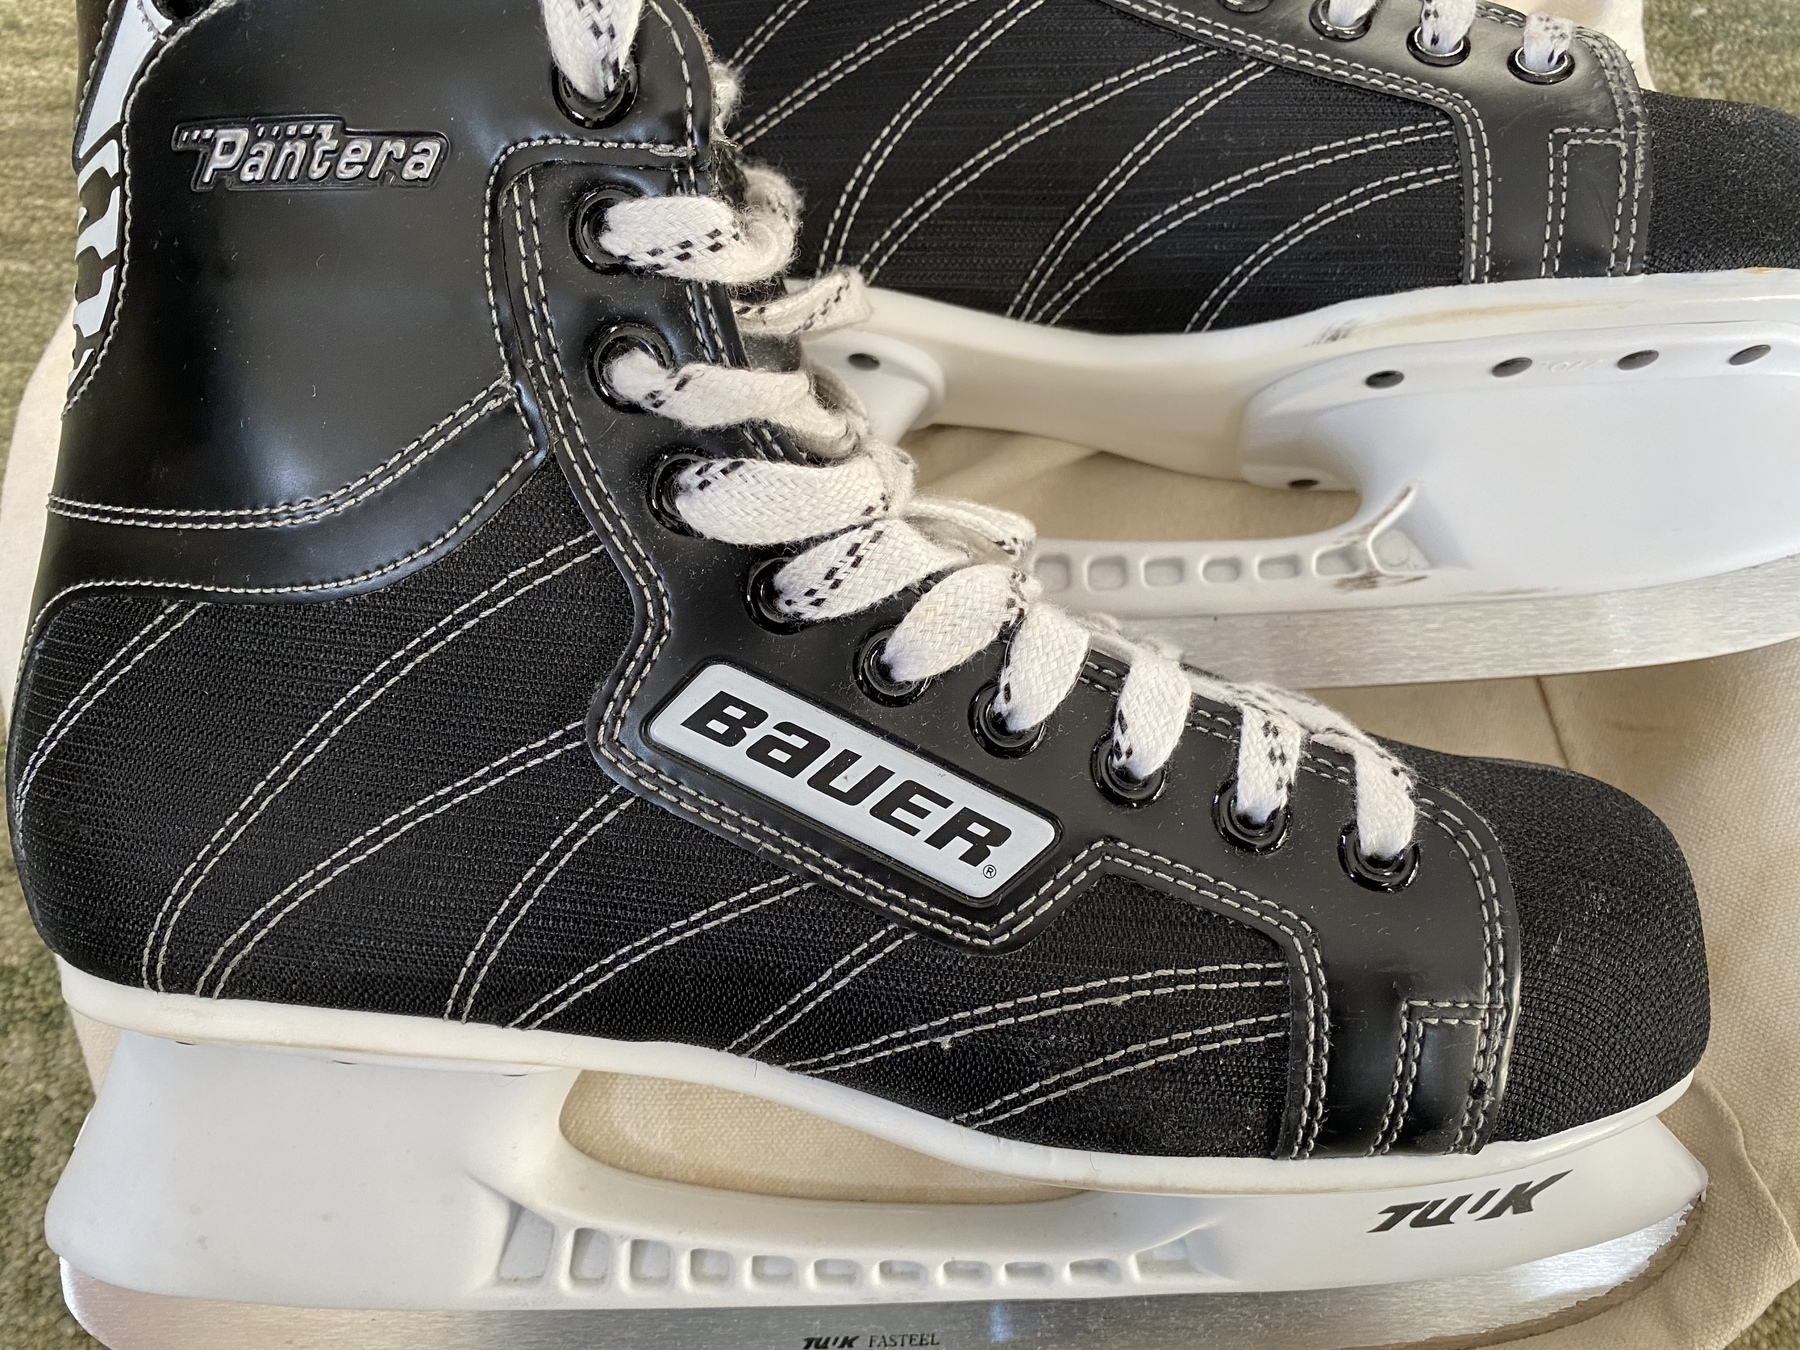 Close up of a pair of black hockey skates.